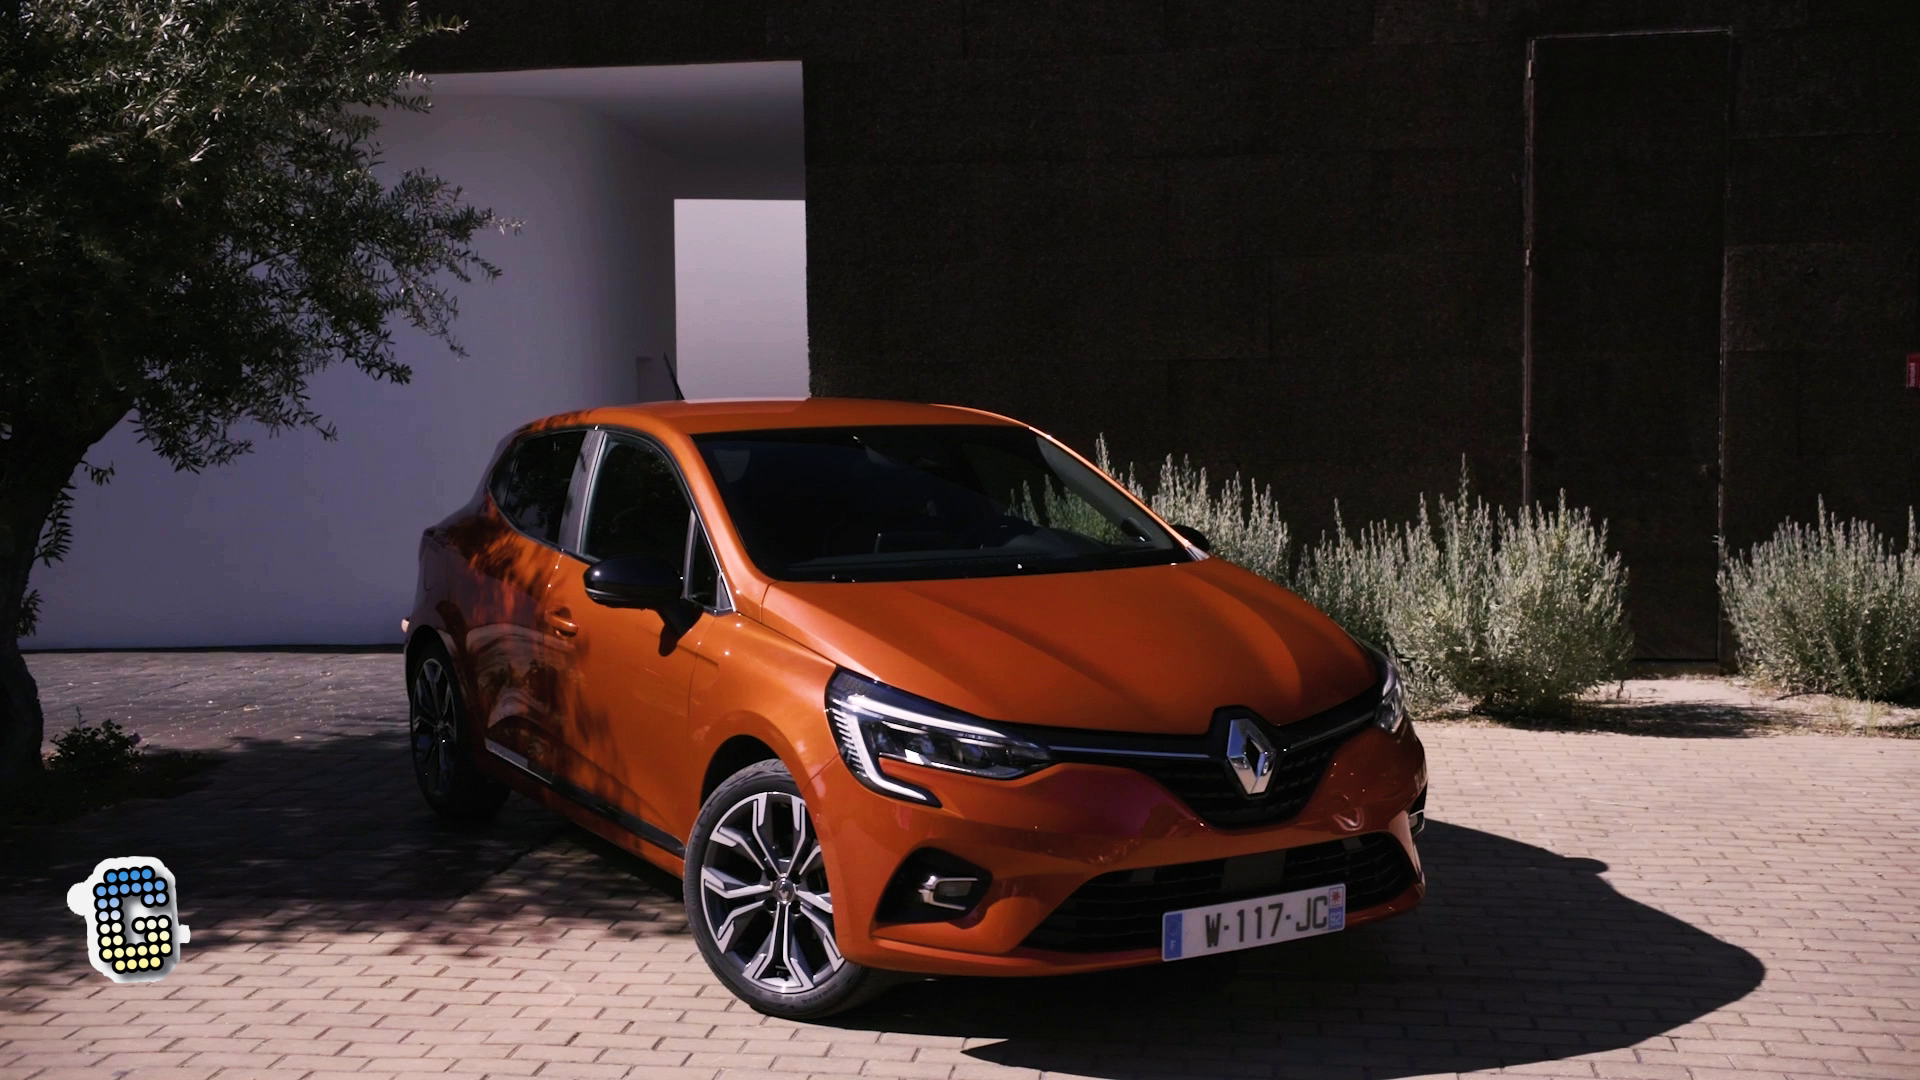 Garázs: A legújabb Renault Clio